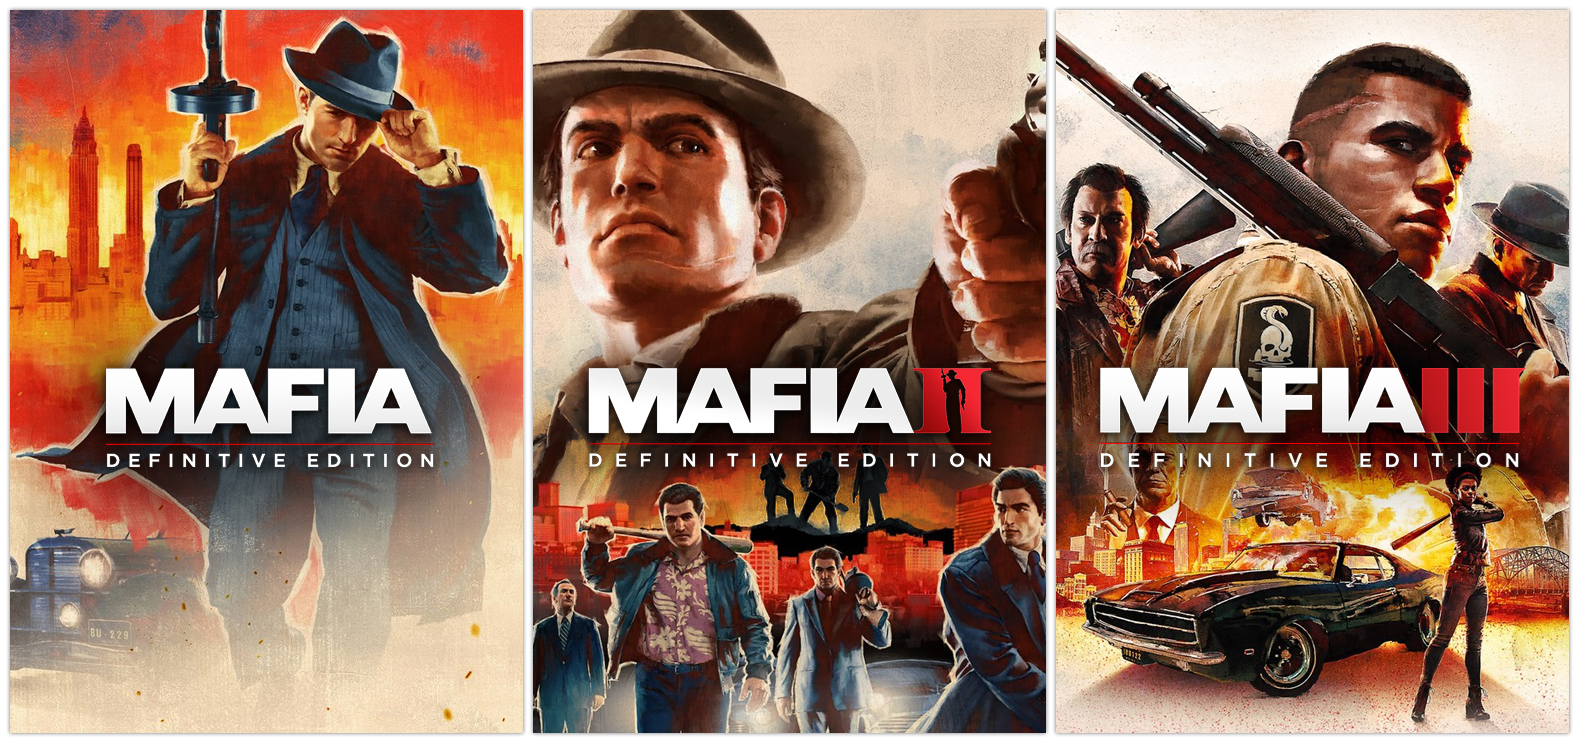 Mafia trilogy is one of the games like GTA 5